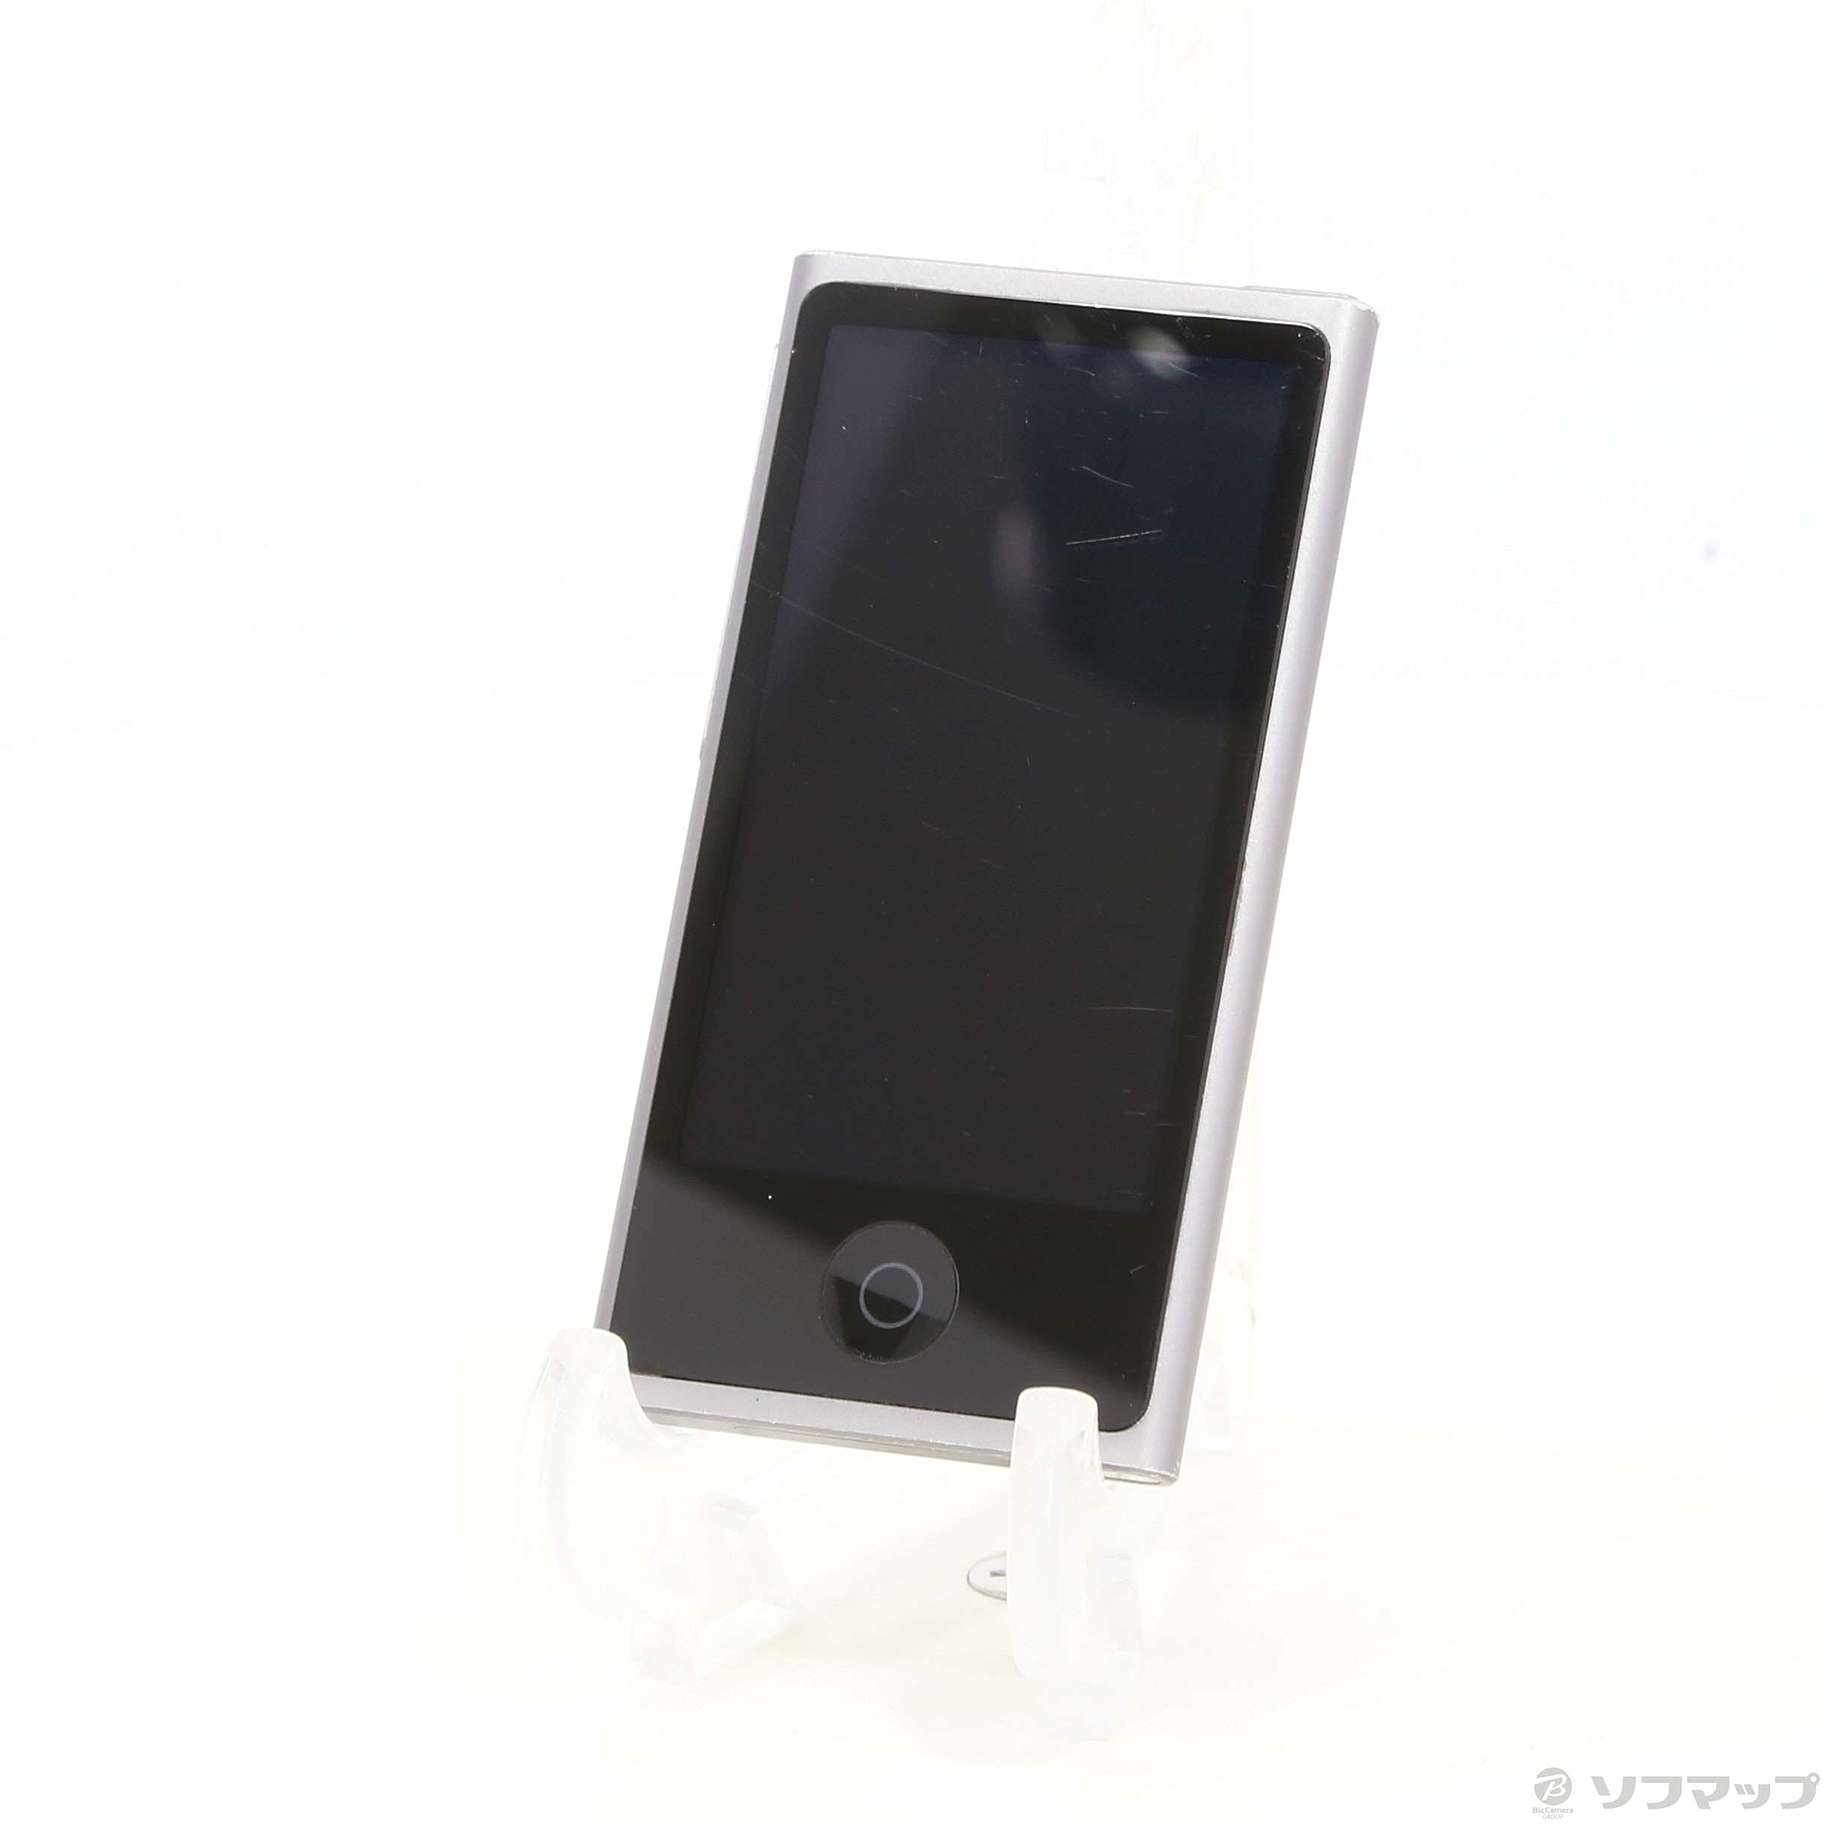 【新品未使用】iPod nano 第7世代 16GB gray apple